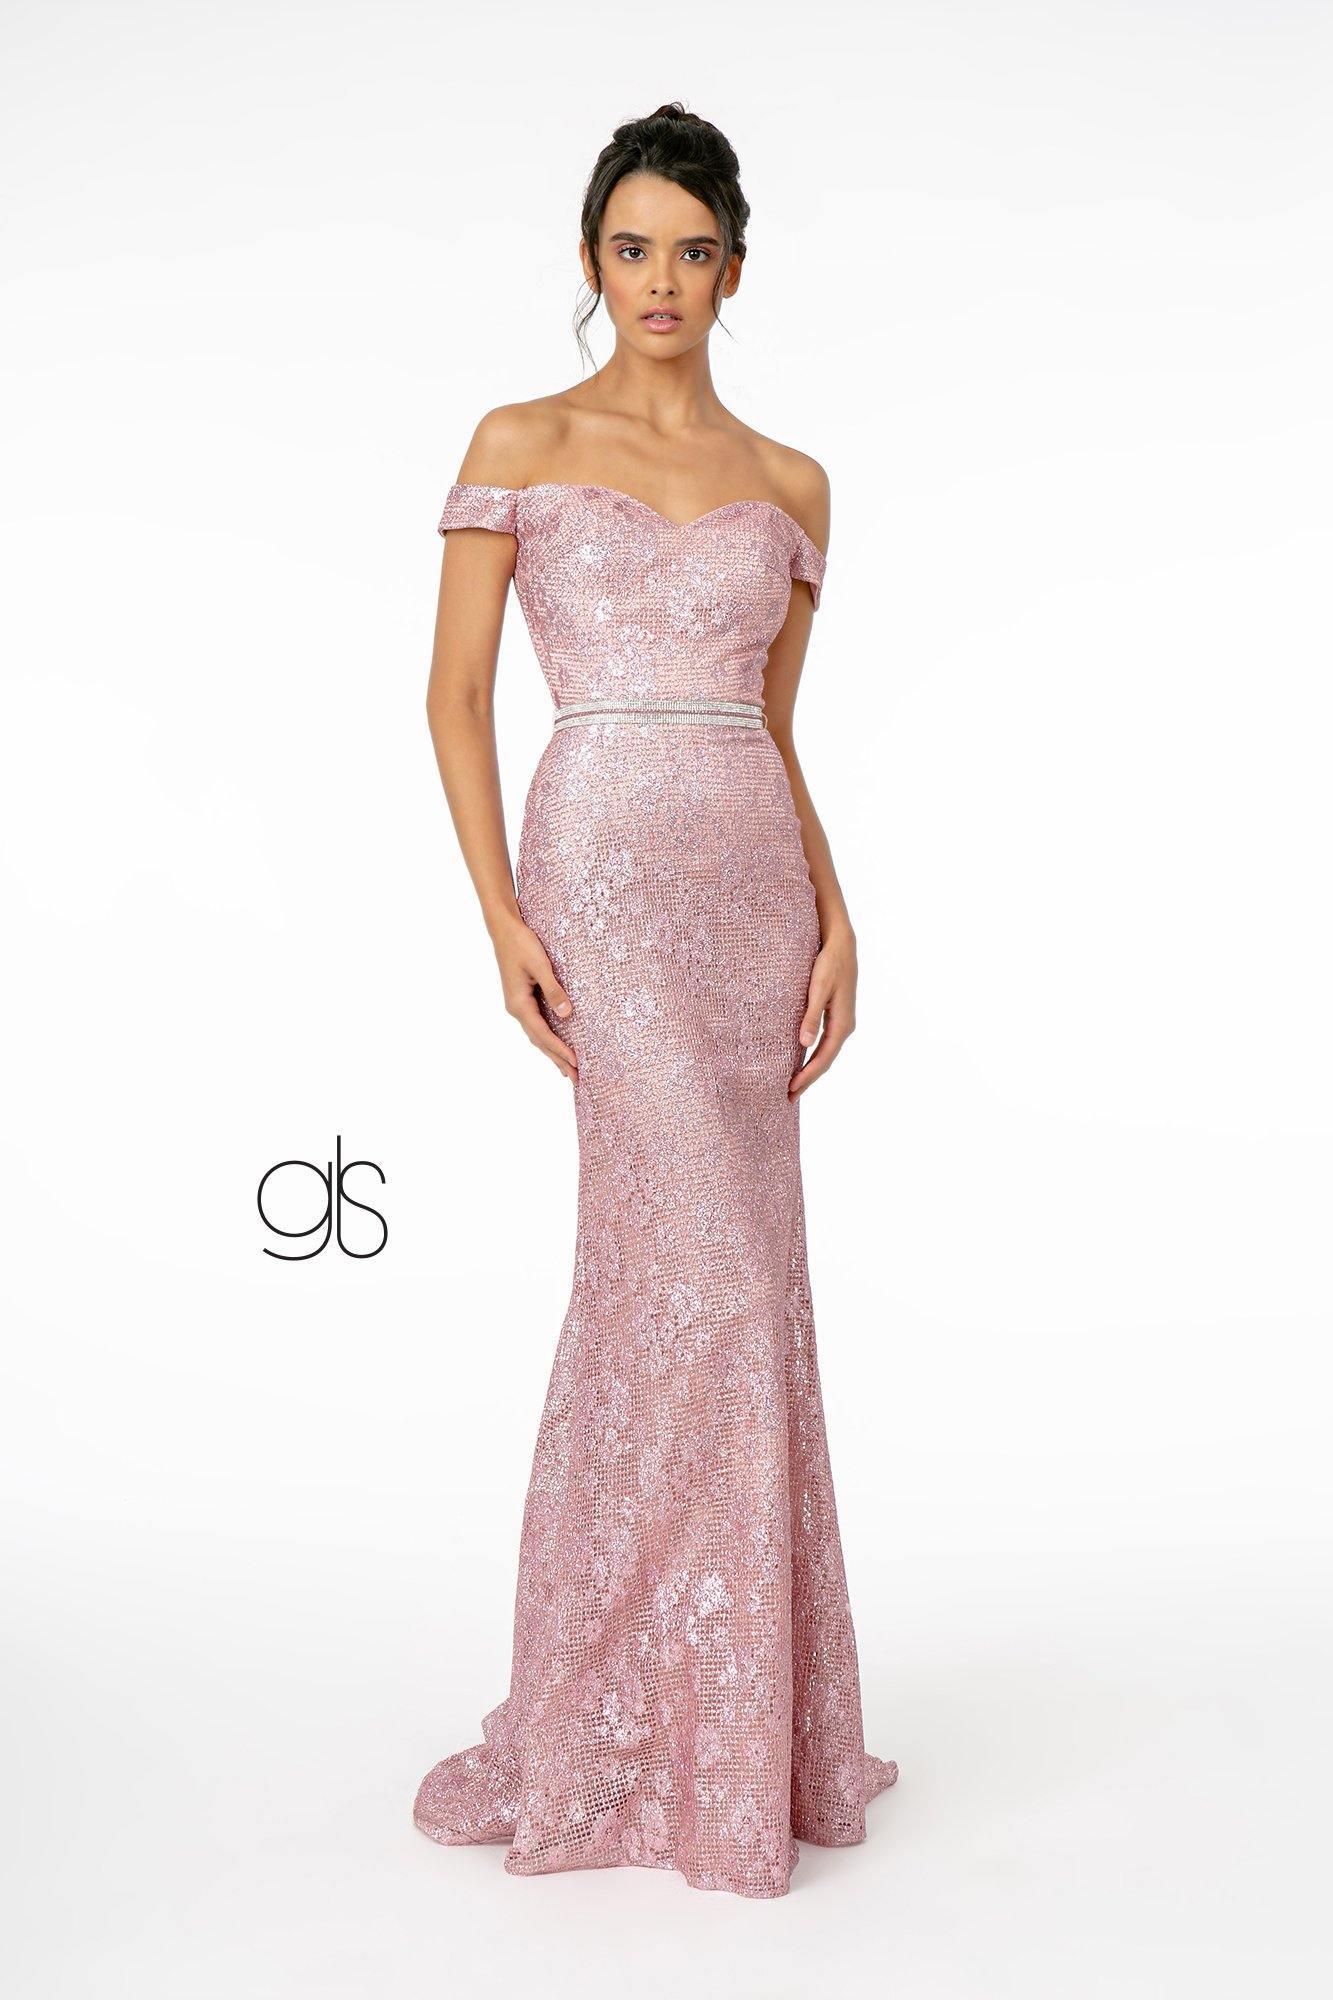 Glitter Netting Mermaid Long Prom Dress Sale - The Dress Outlet